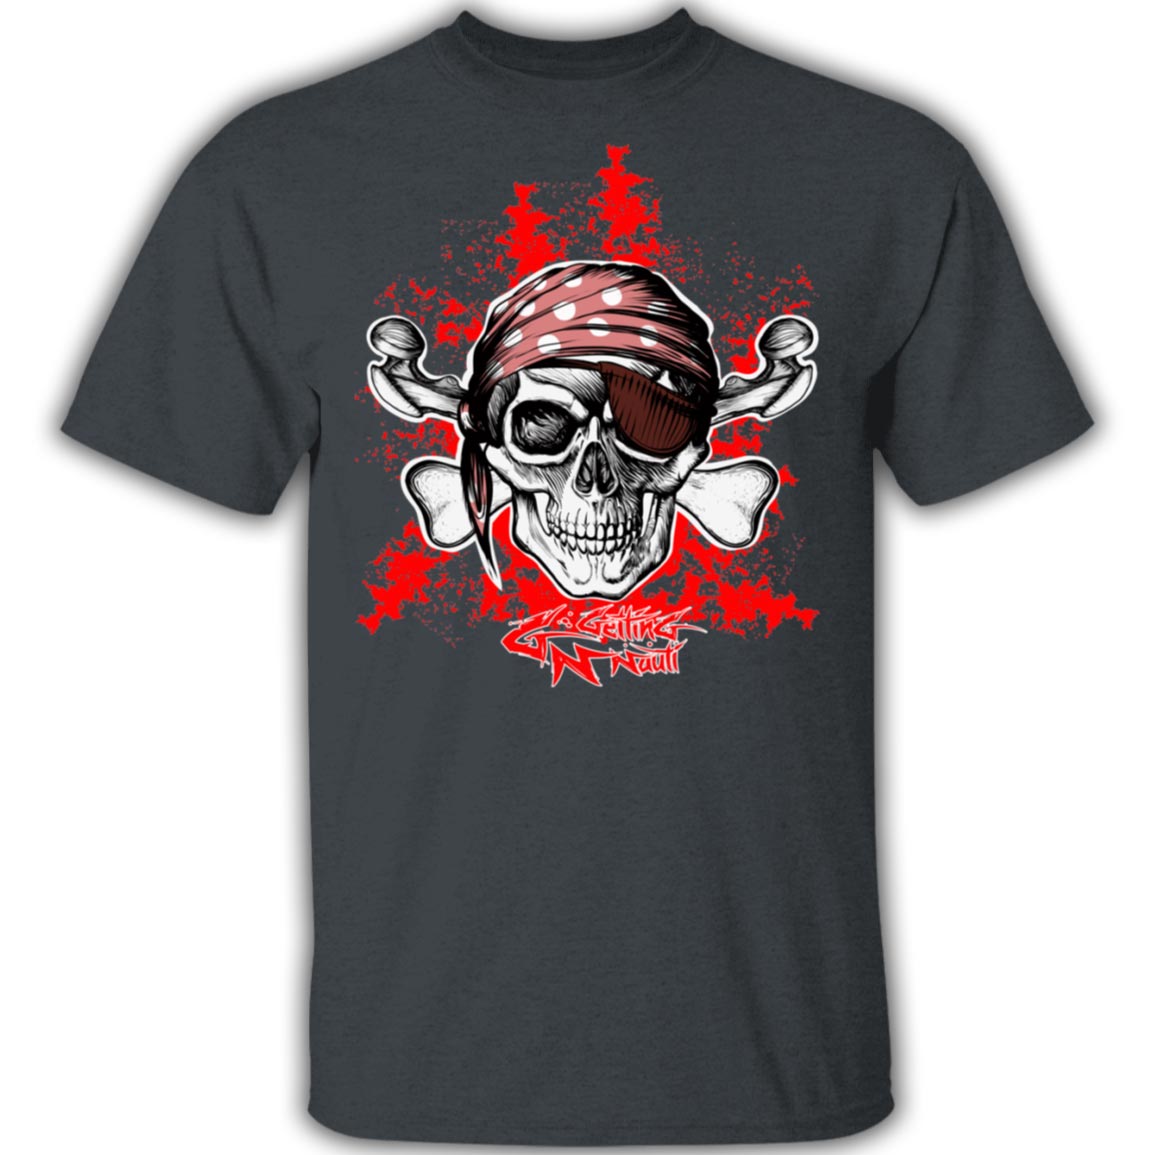 Pirate Skull & Crossbones - Cotton T-Shirt